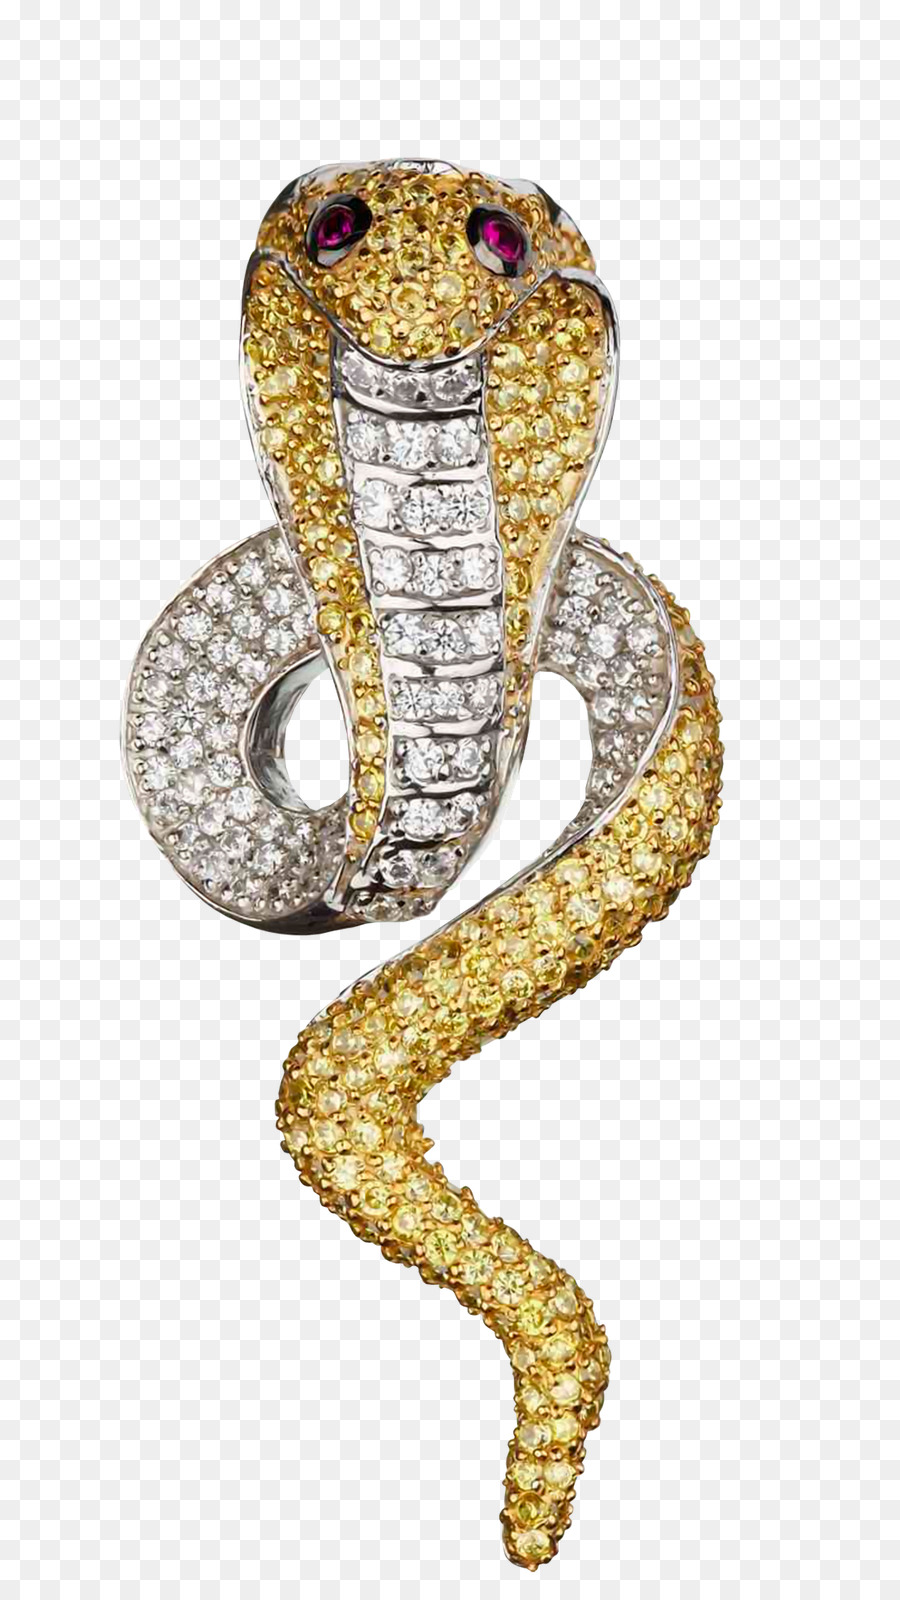 Gold Cobra Klapperschlange - Schlange